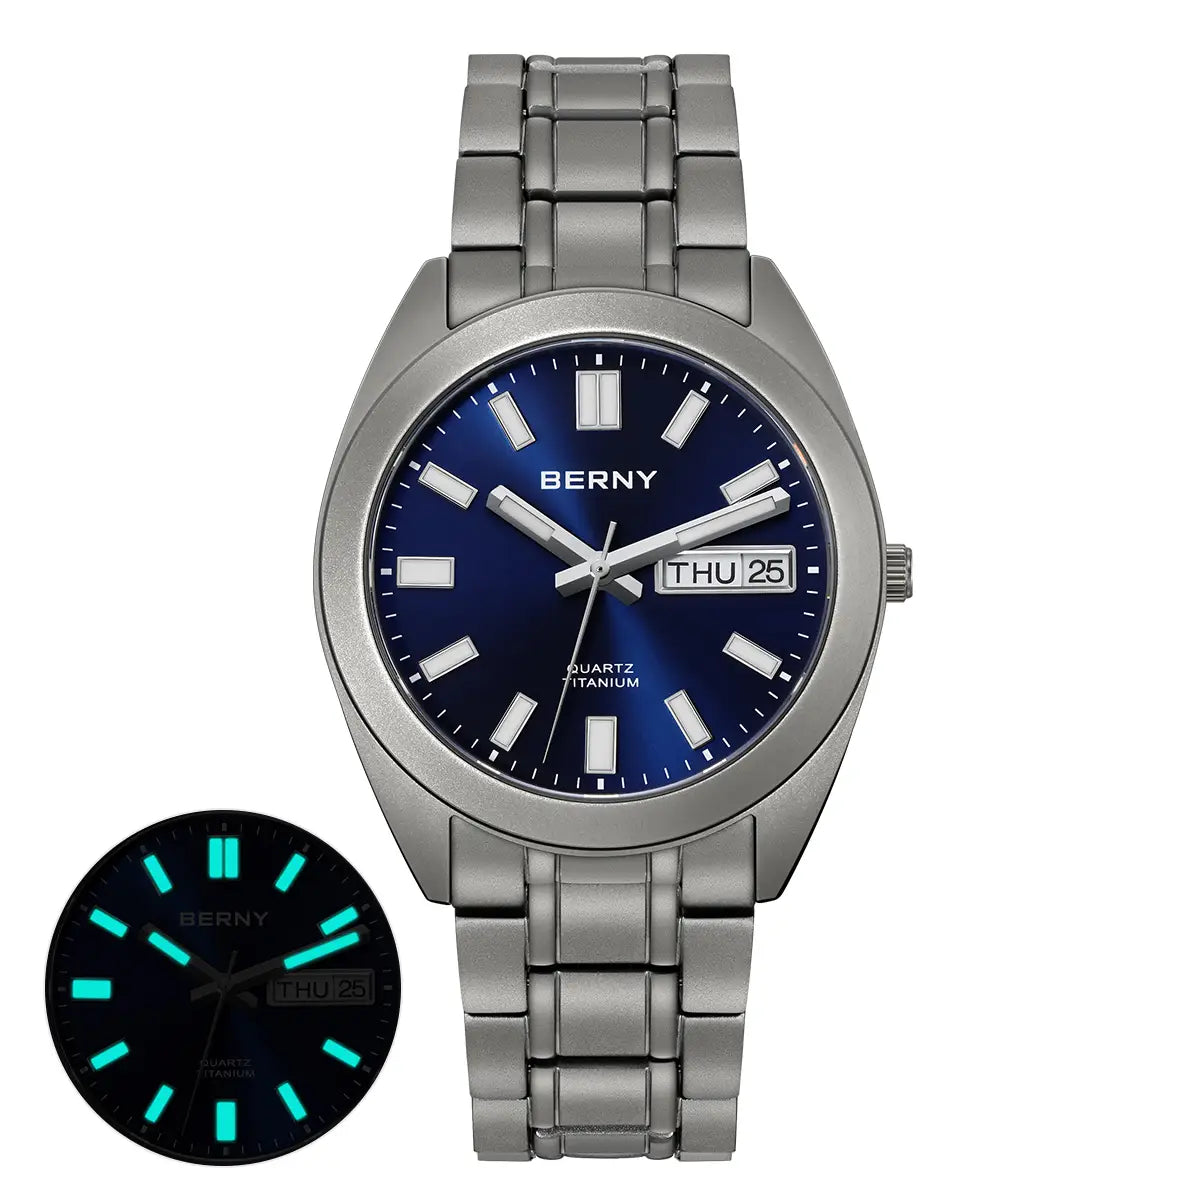 titanium dress watch(blue dial) with titanium strap and blue super luminous